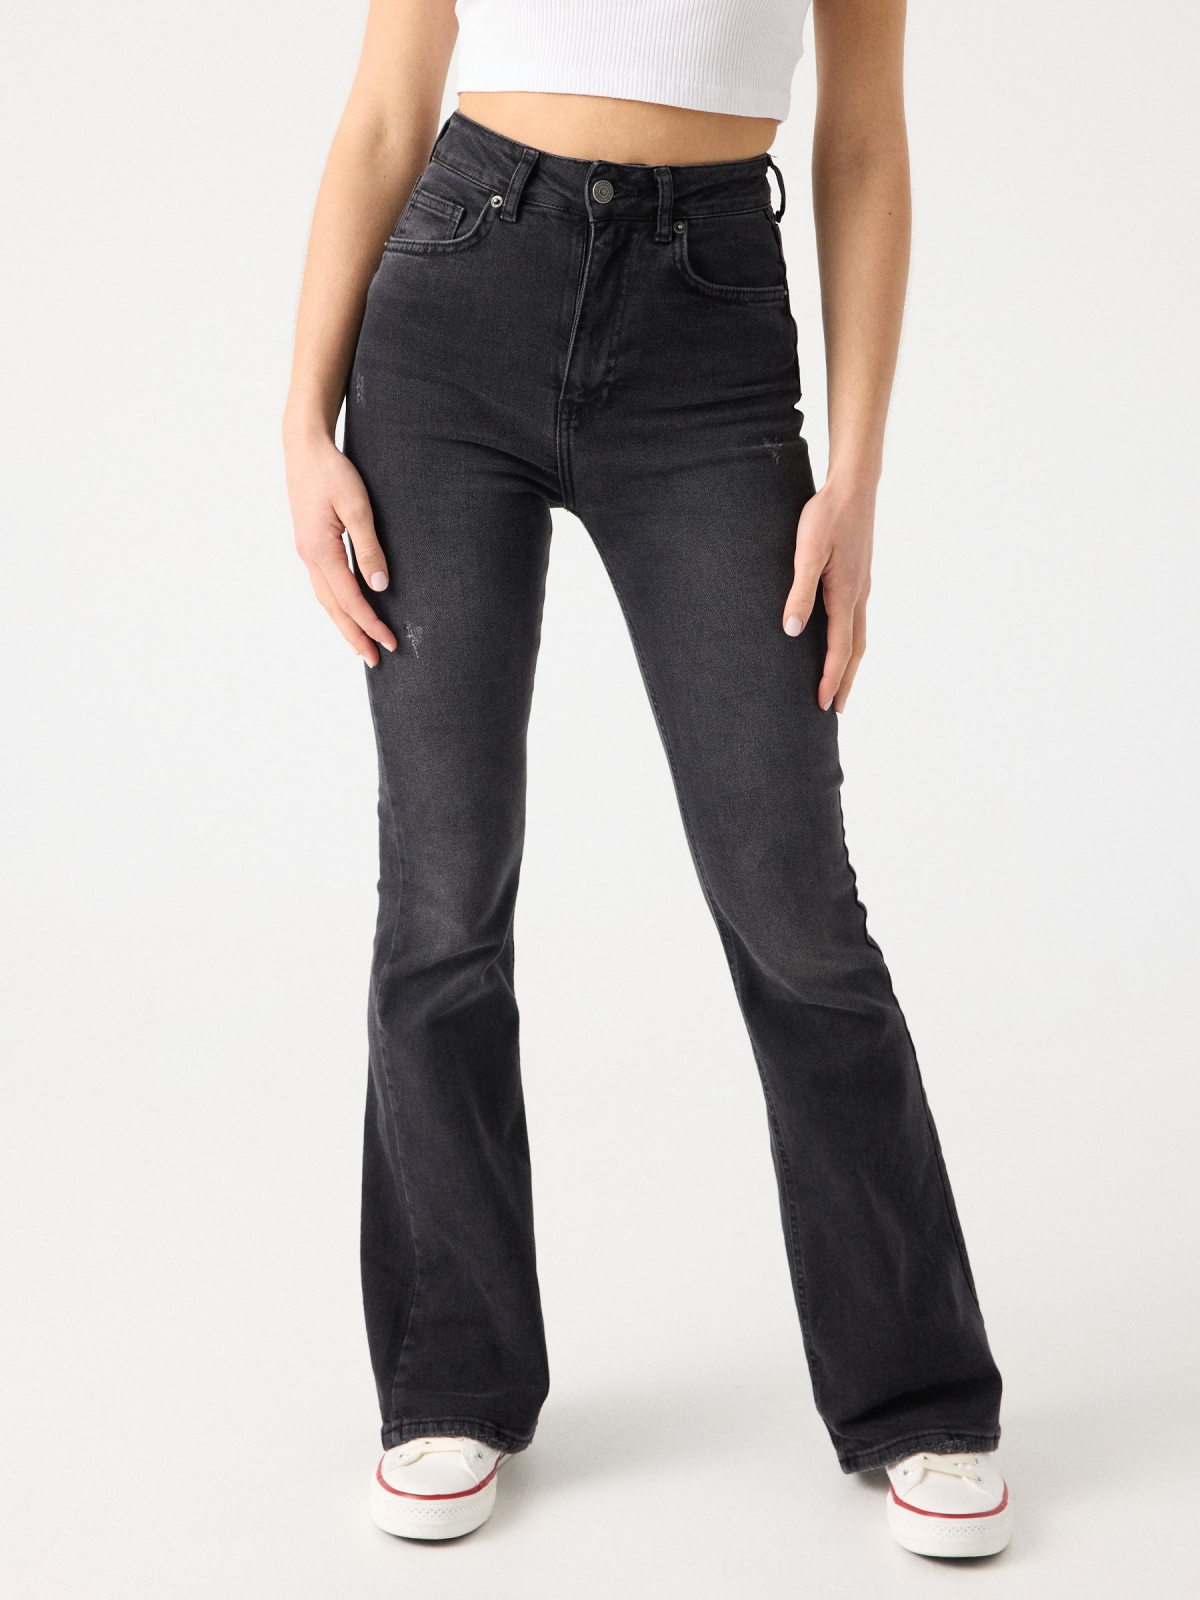 Jeans flare preto cintura alta preto vista meia frontal